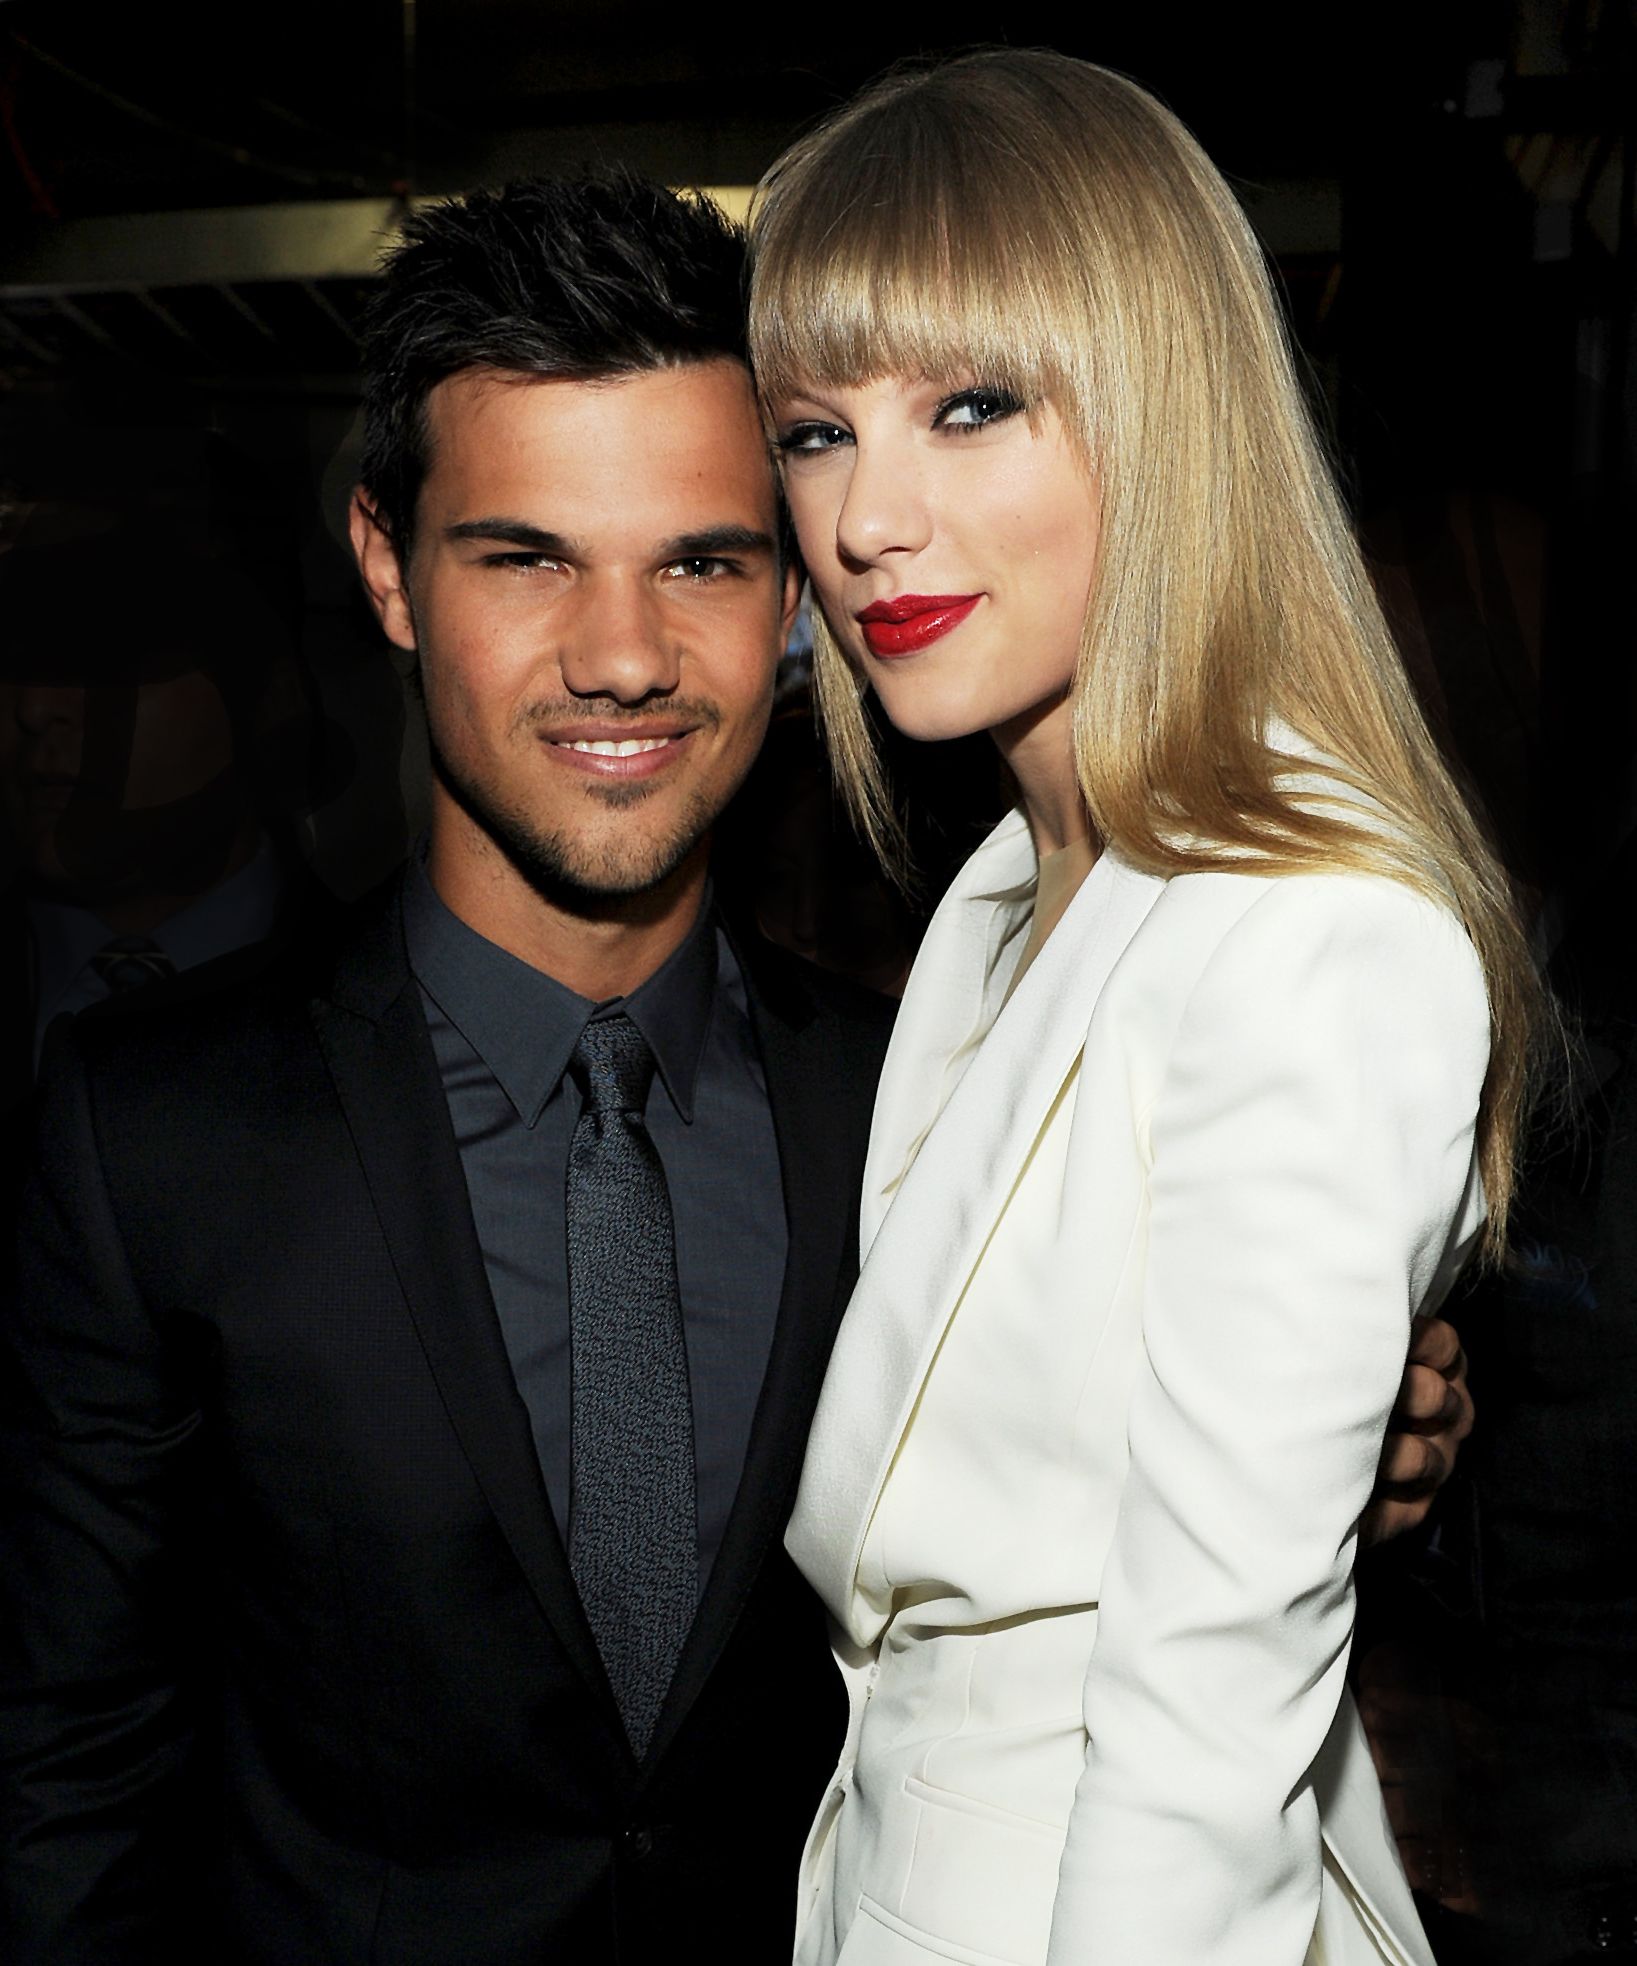 Taylor Swift e Taylor Lautner